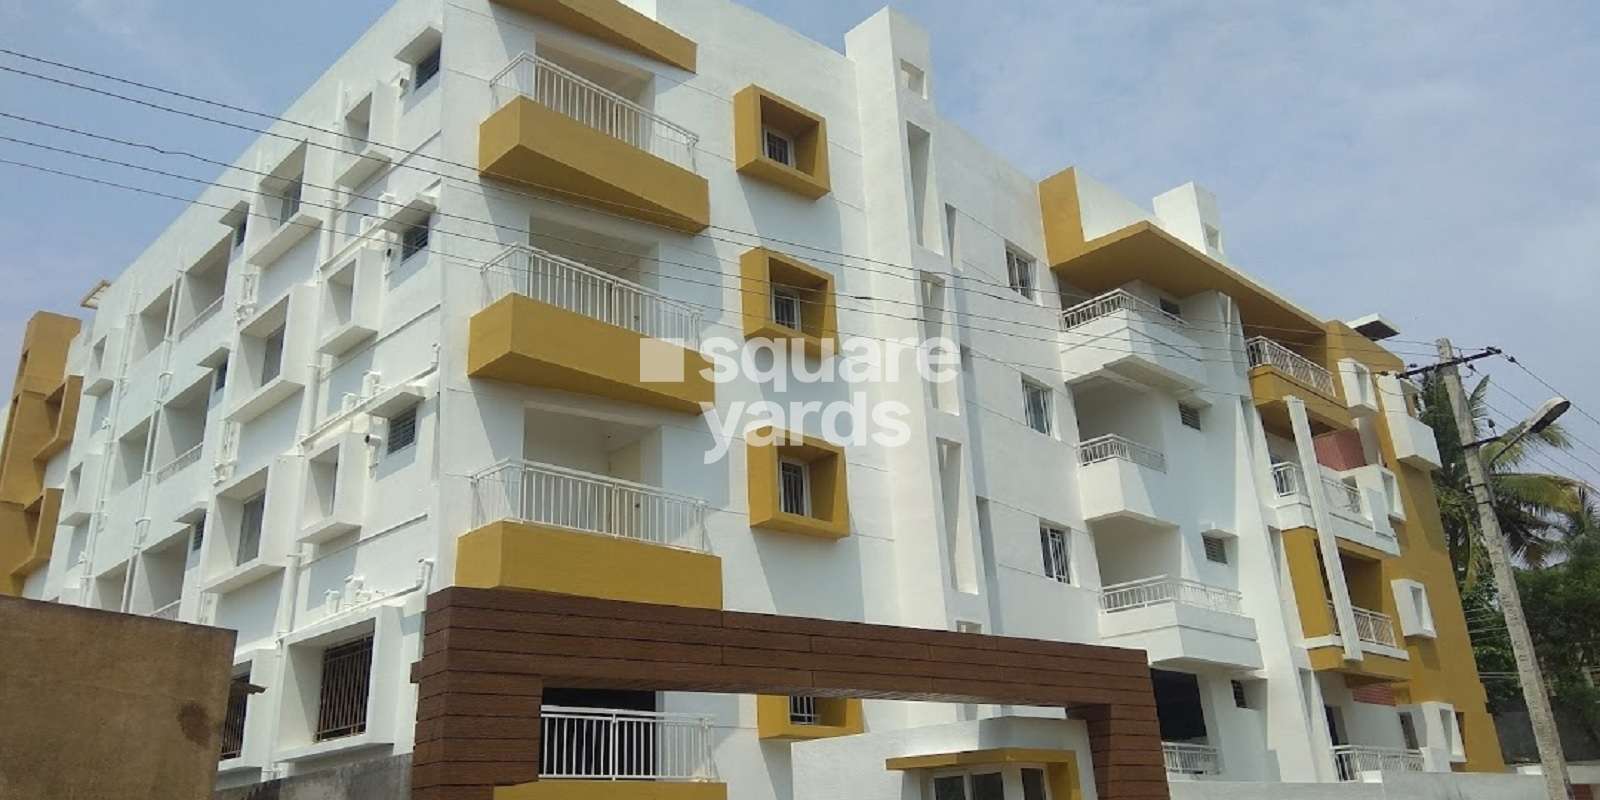 Jai Shakthi Apartment Cover Image